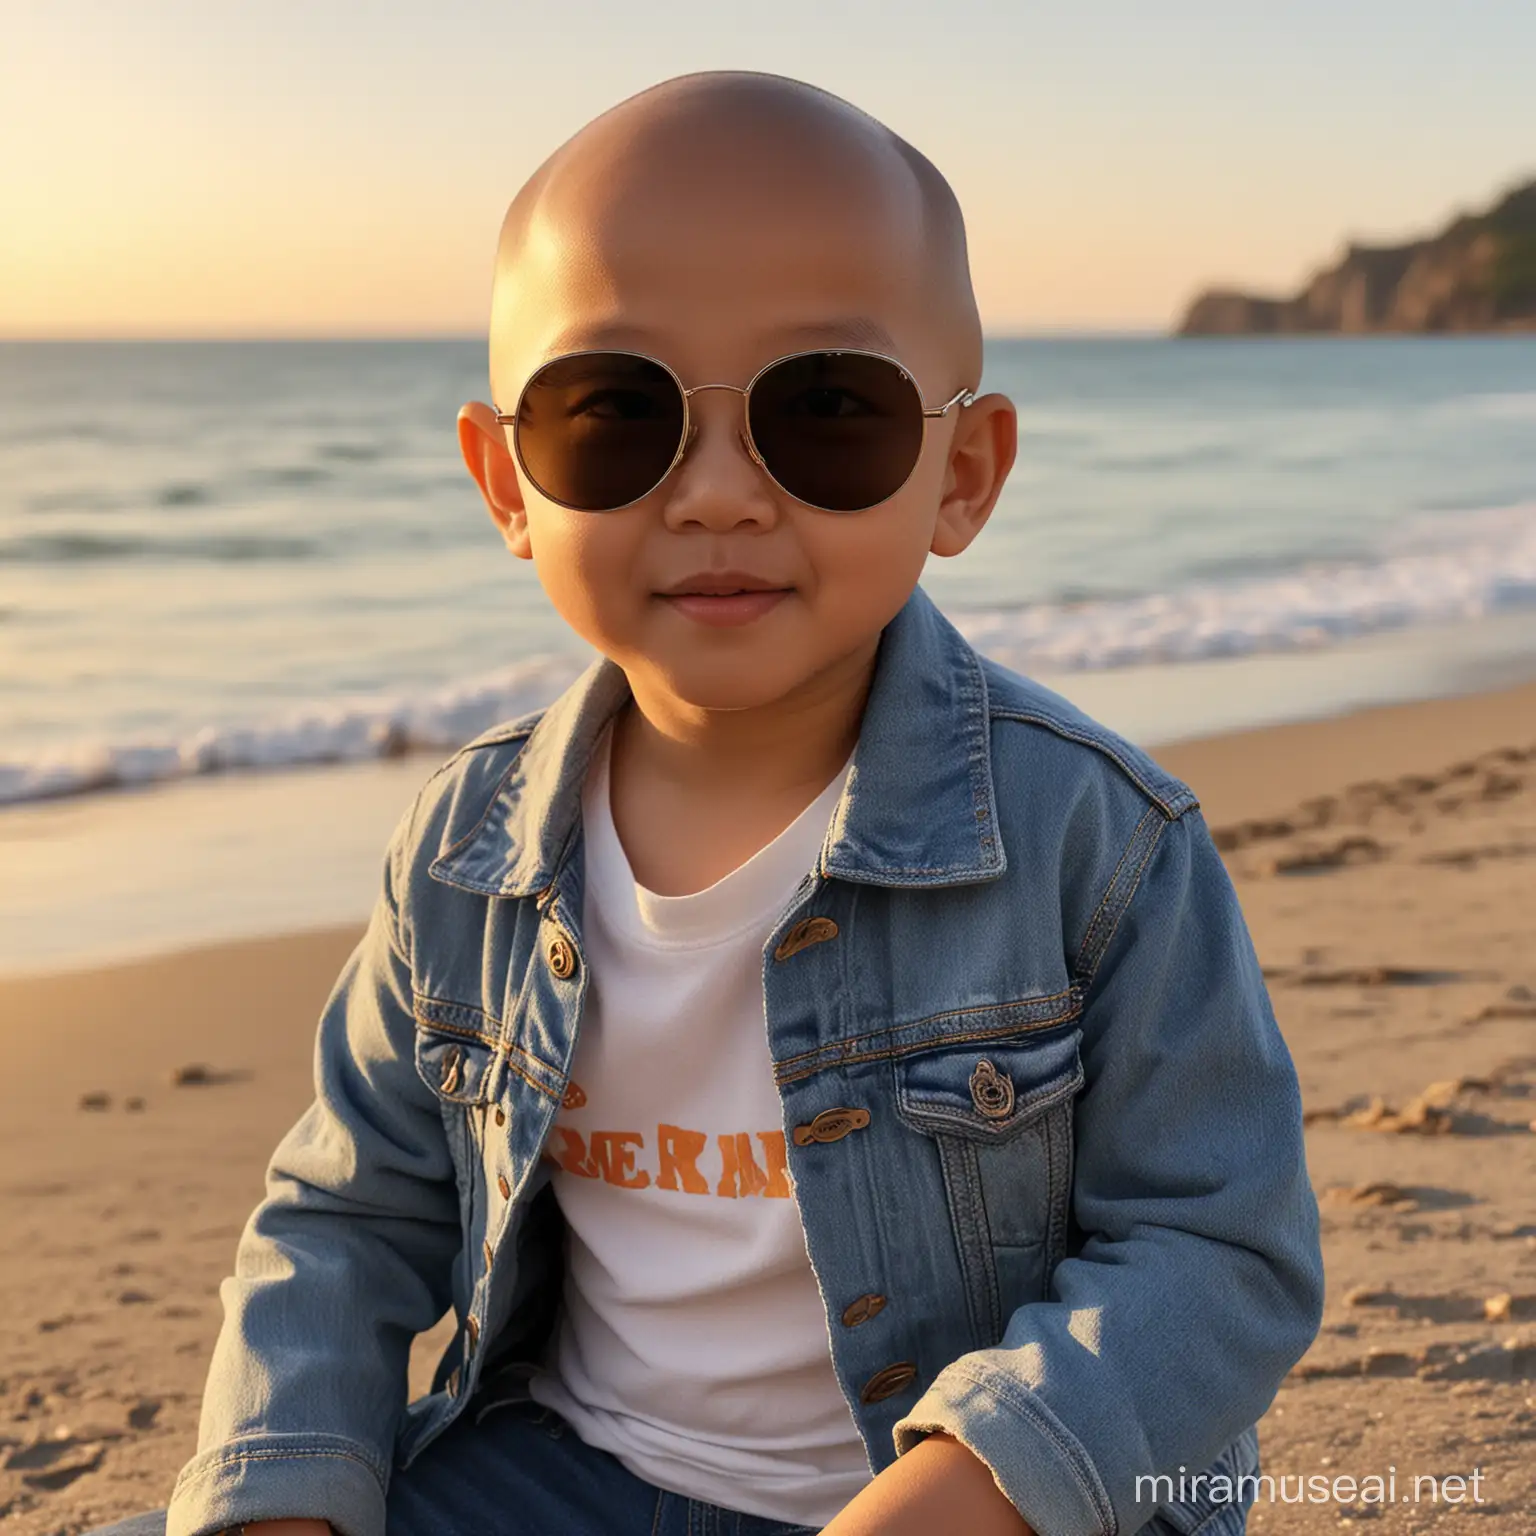 Asian Child in Denim Jacket with Round Sunglasses Enjoying Sunset Beach View